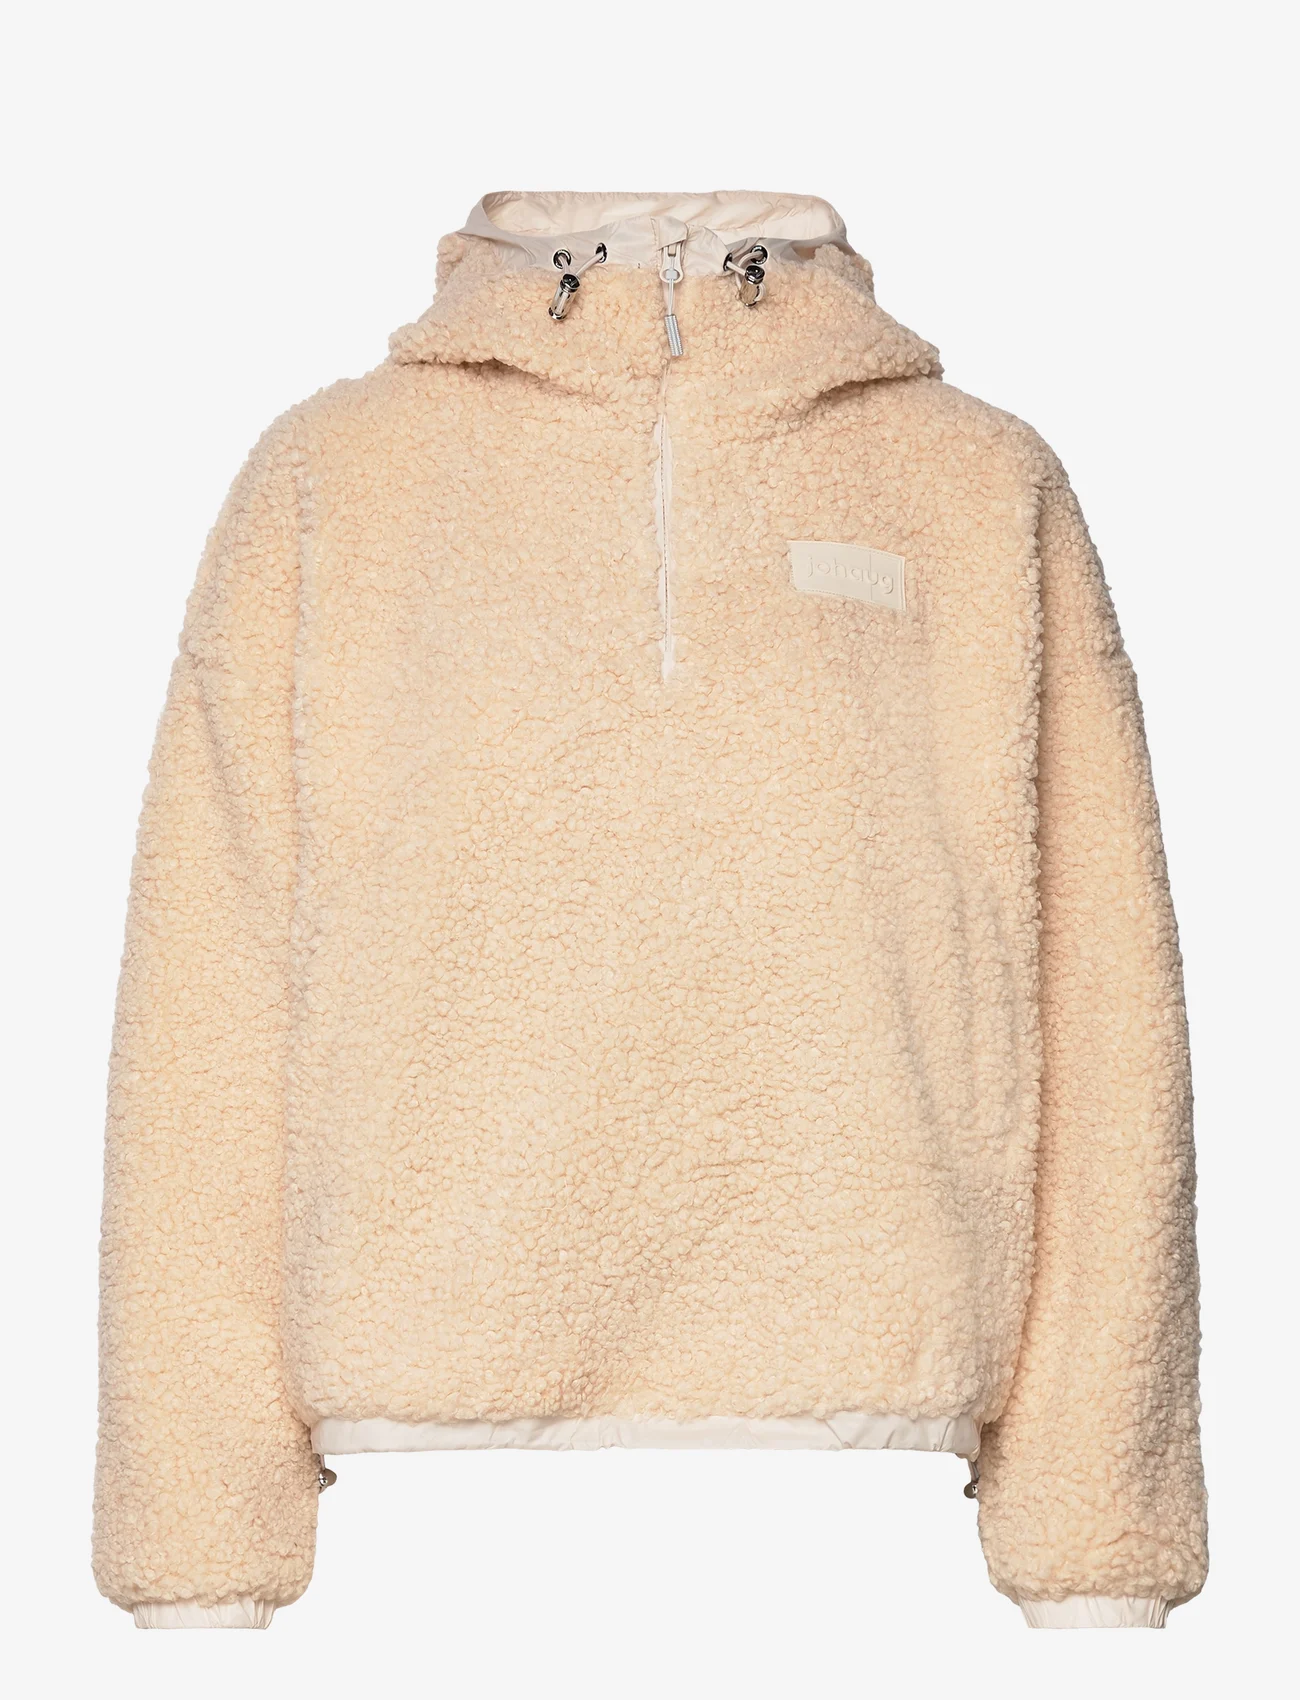 Johaug - Sway Pile Hoodie - mid layer jackets - light beige - 0